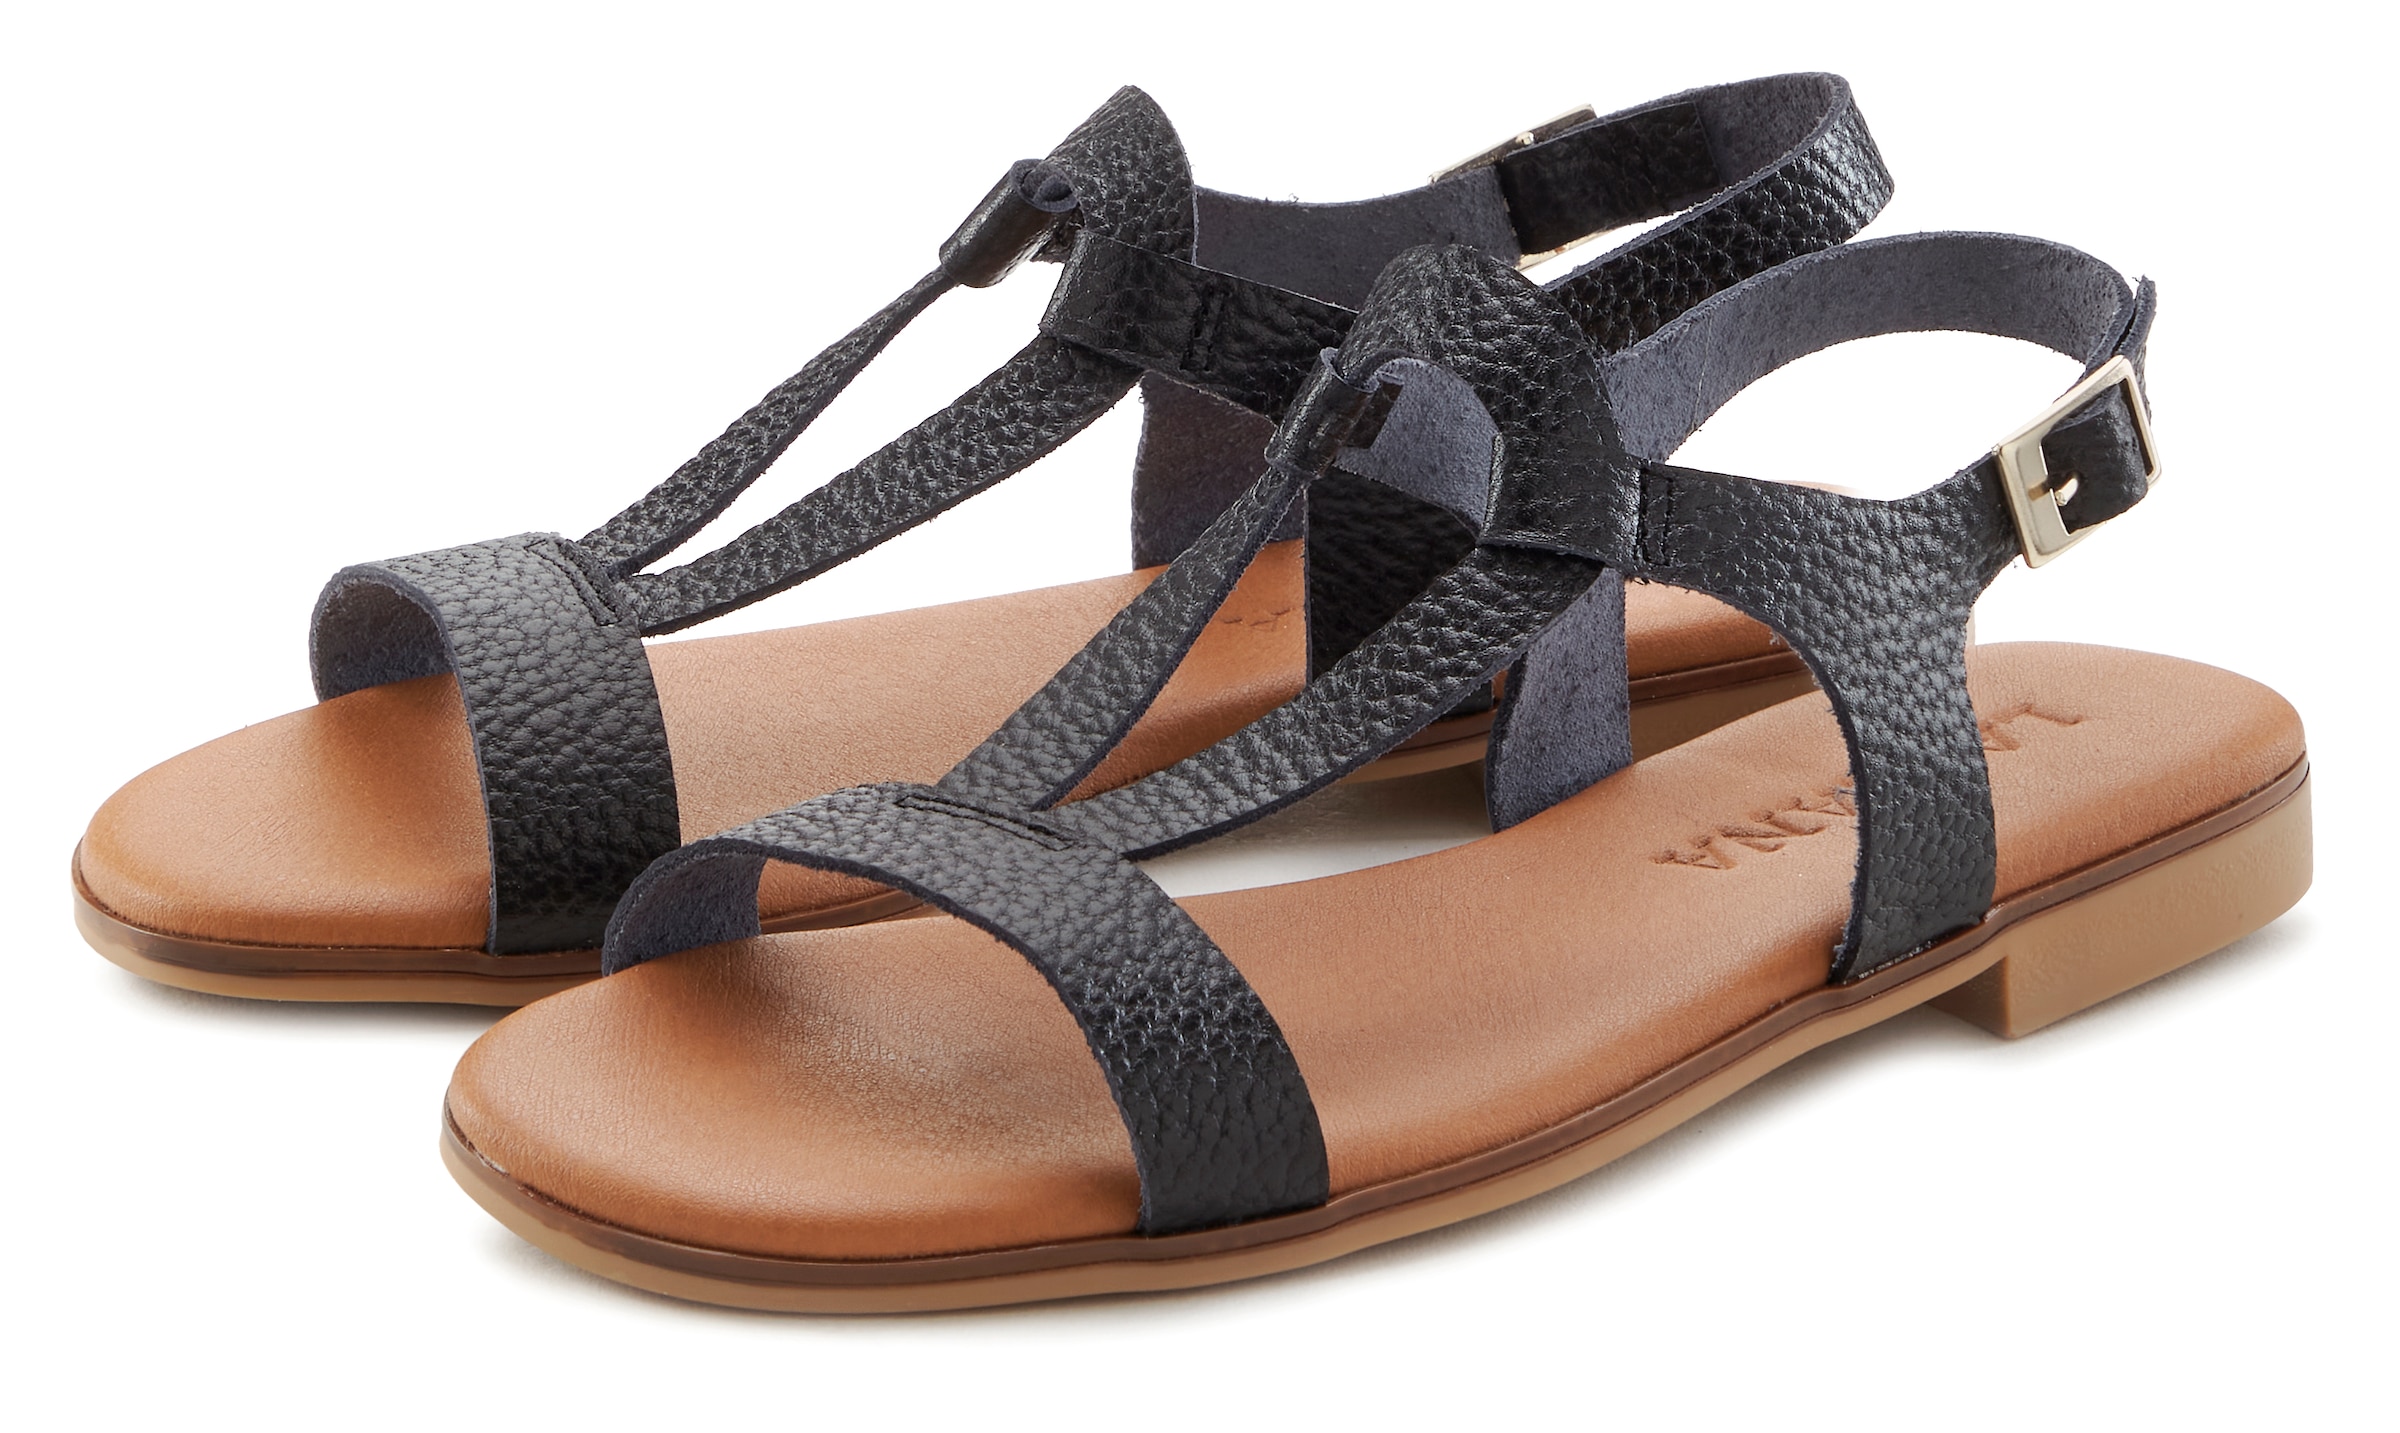 LASCANA Sandale, Sandalette, Sommerschuh aus hochwertigem Leder im Metallic-Look